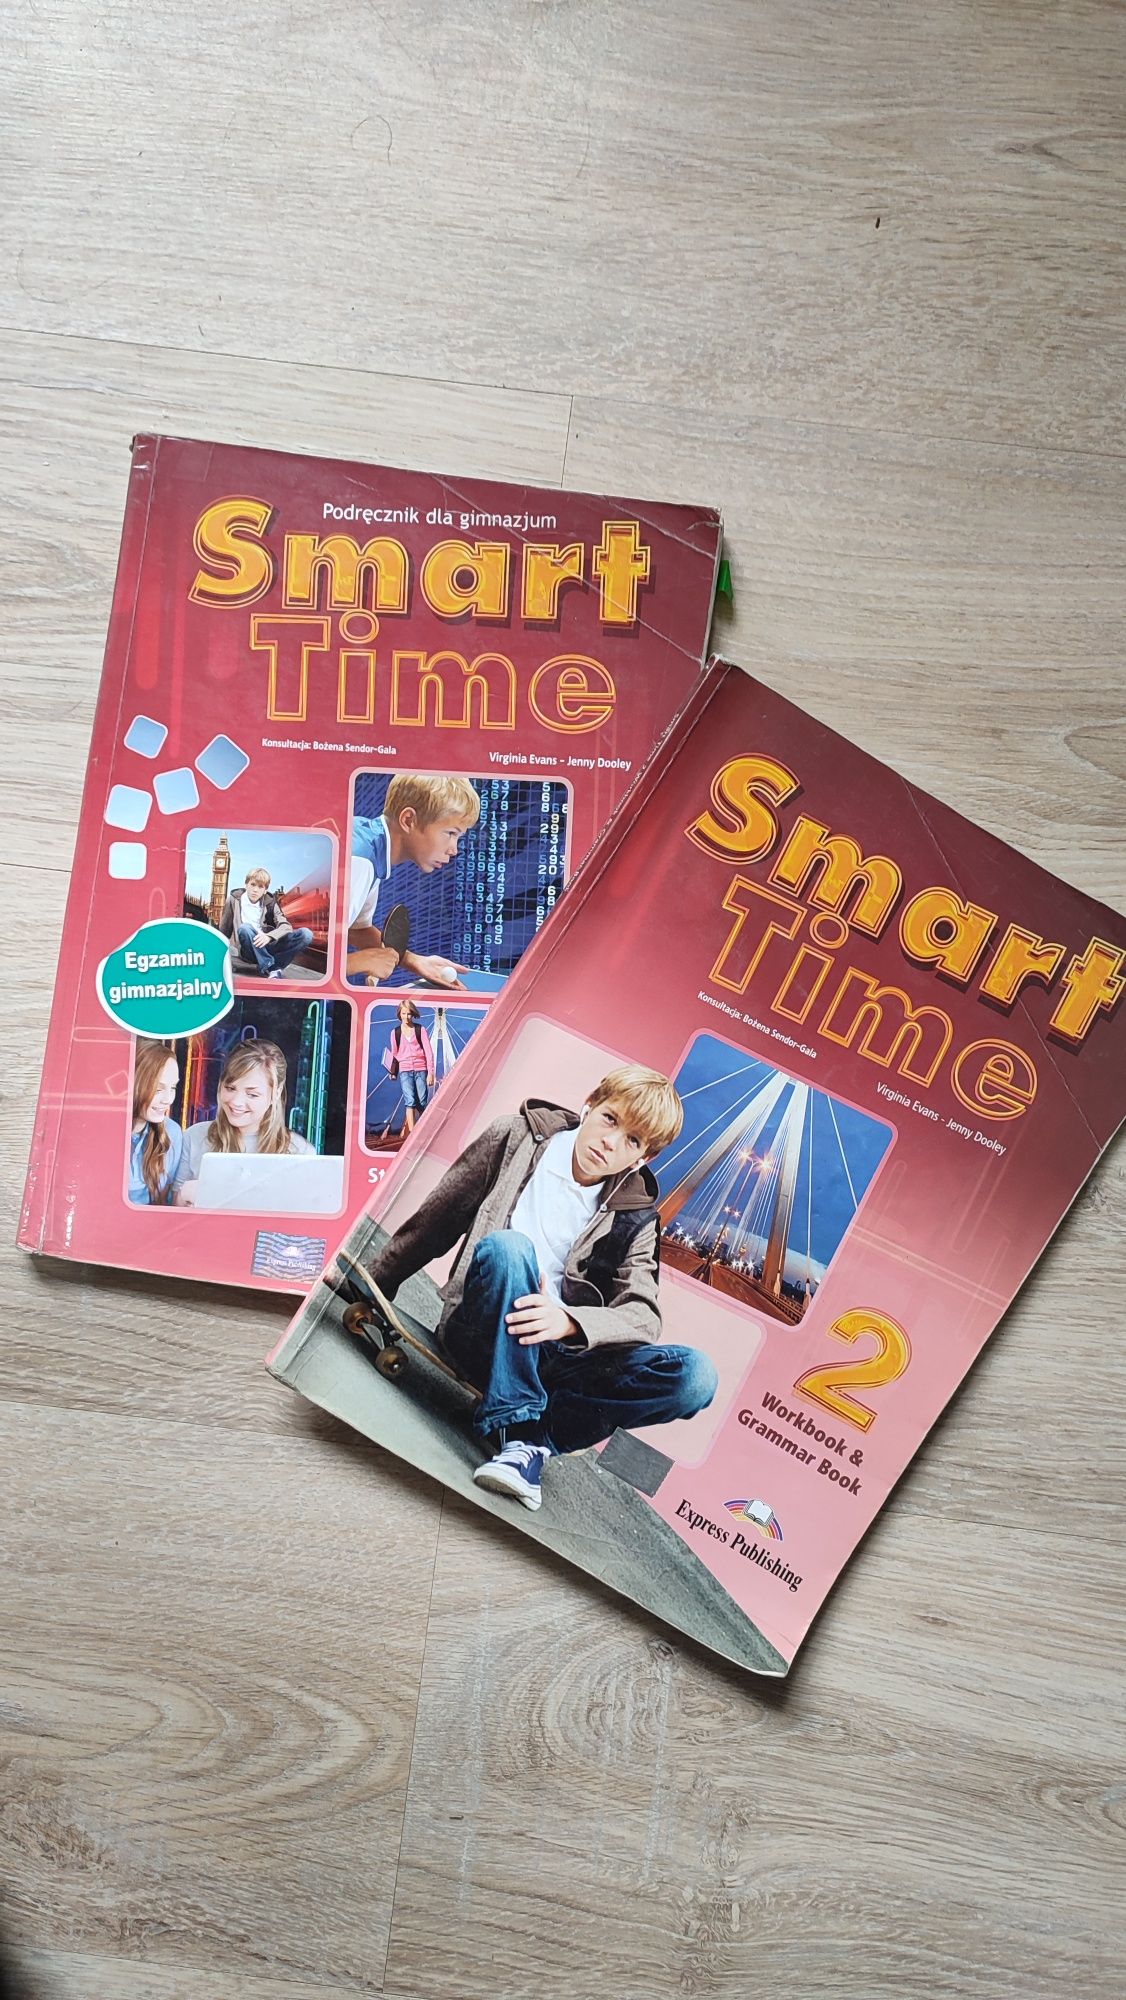 Smart time 2 workbook, grammar book, student's book